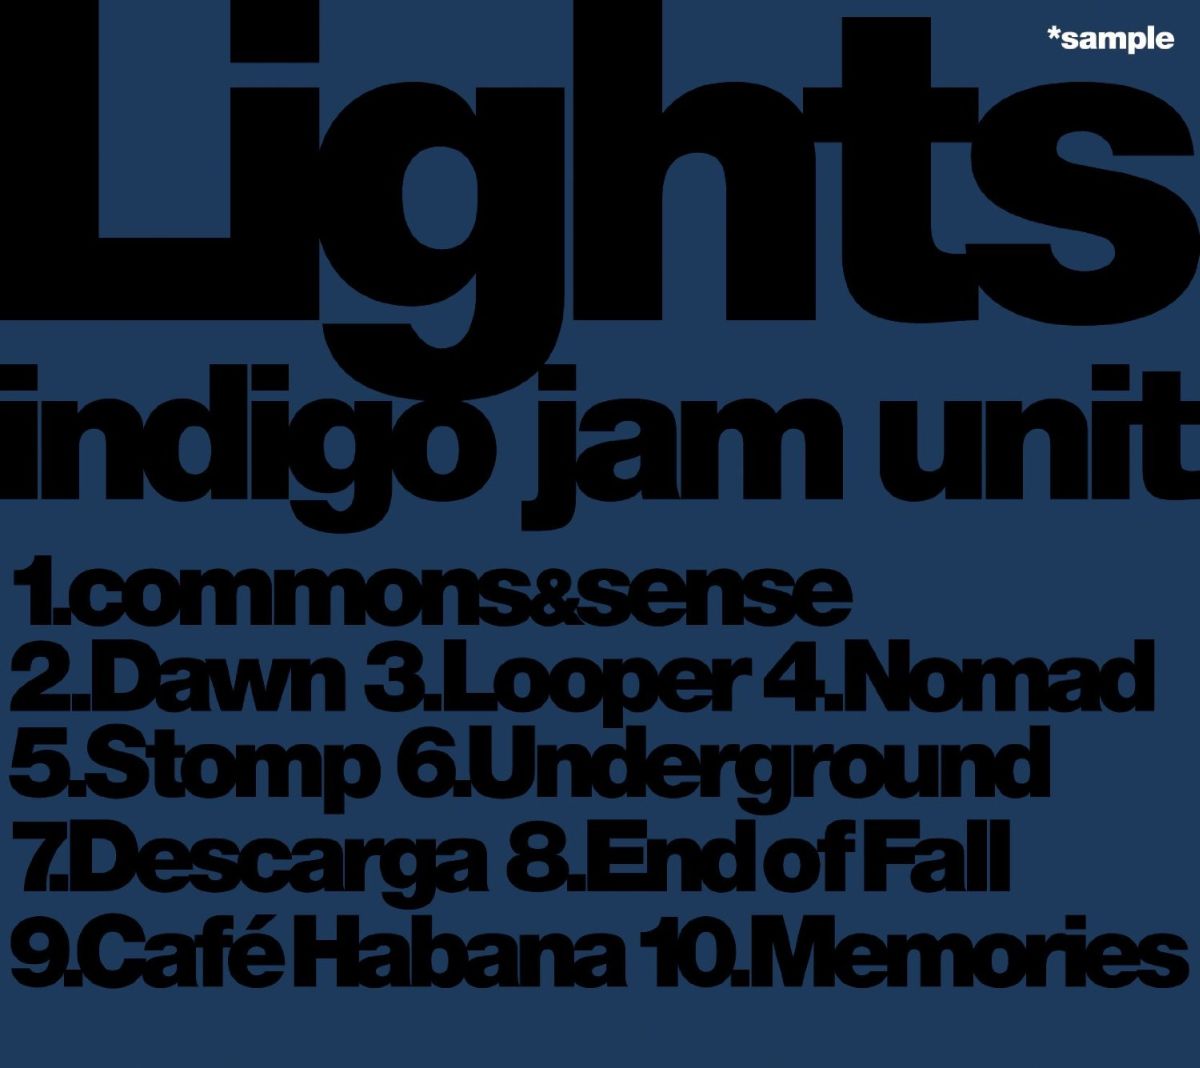 Lights indigo jam unit